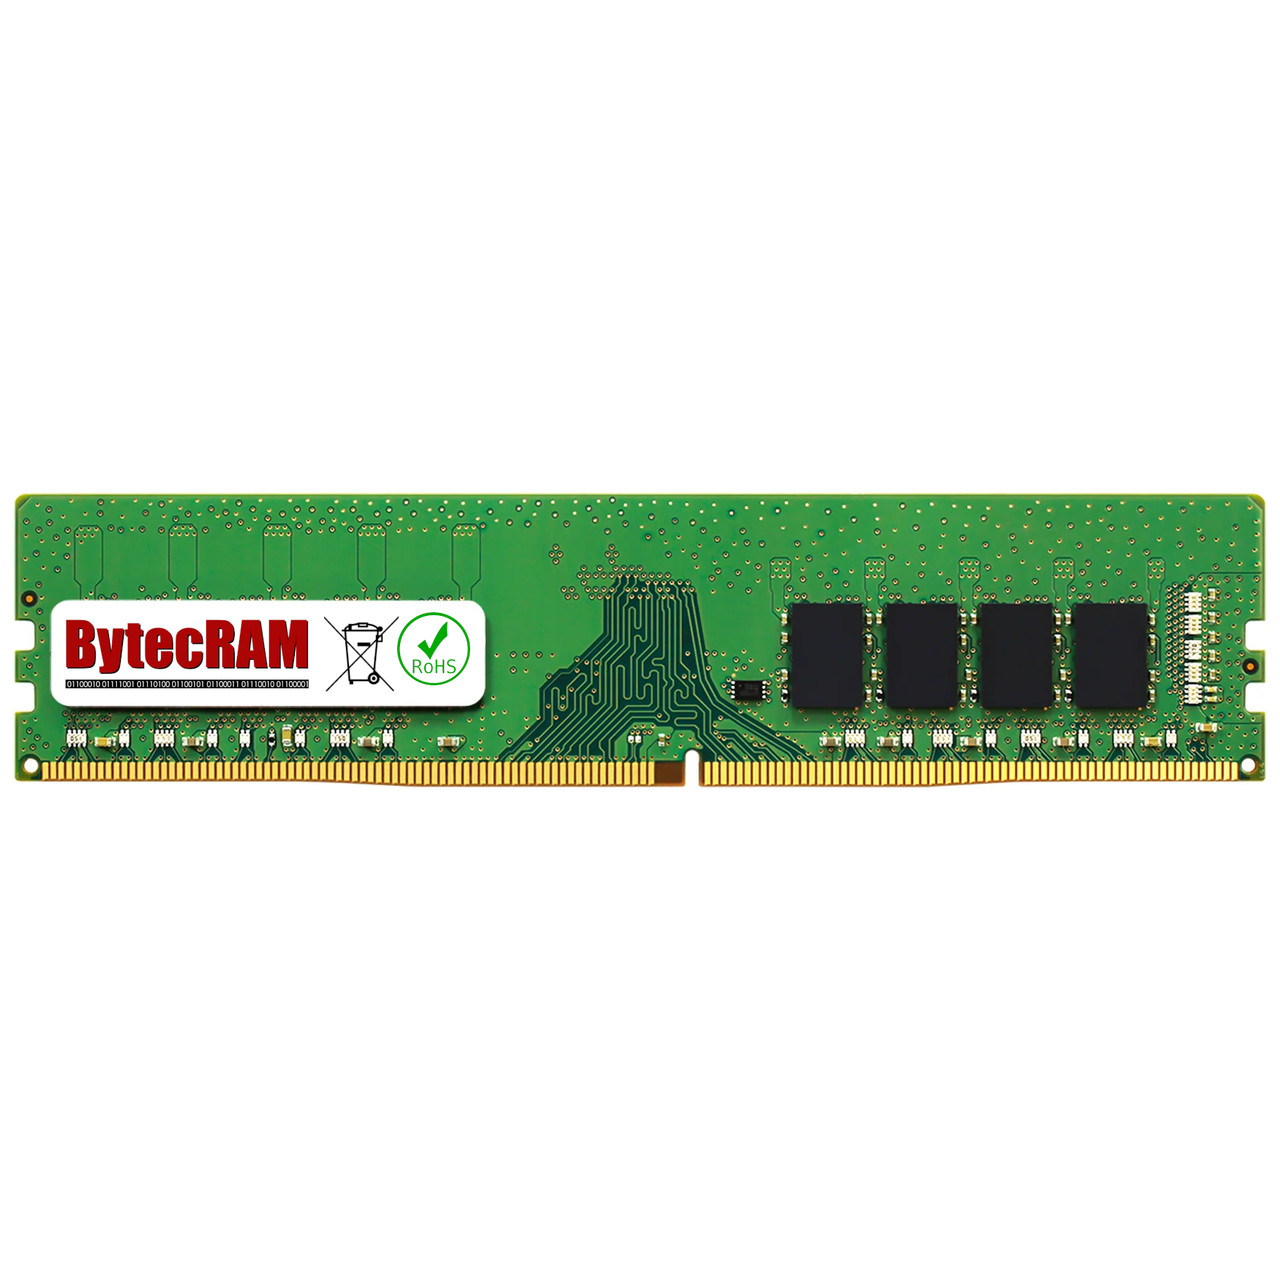 eBay*16GB Dell Vostro 5880 DDR4 3200MHz UDIMM Memory RAM Upgrade